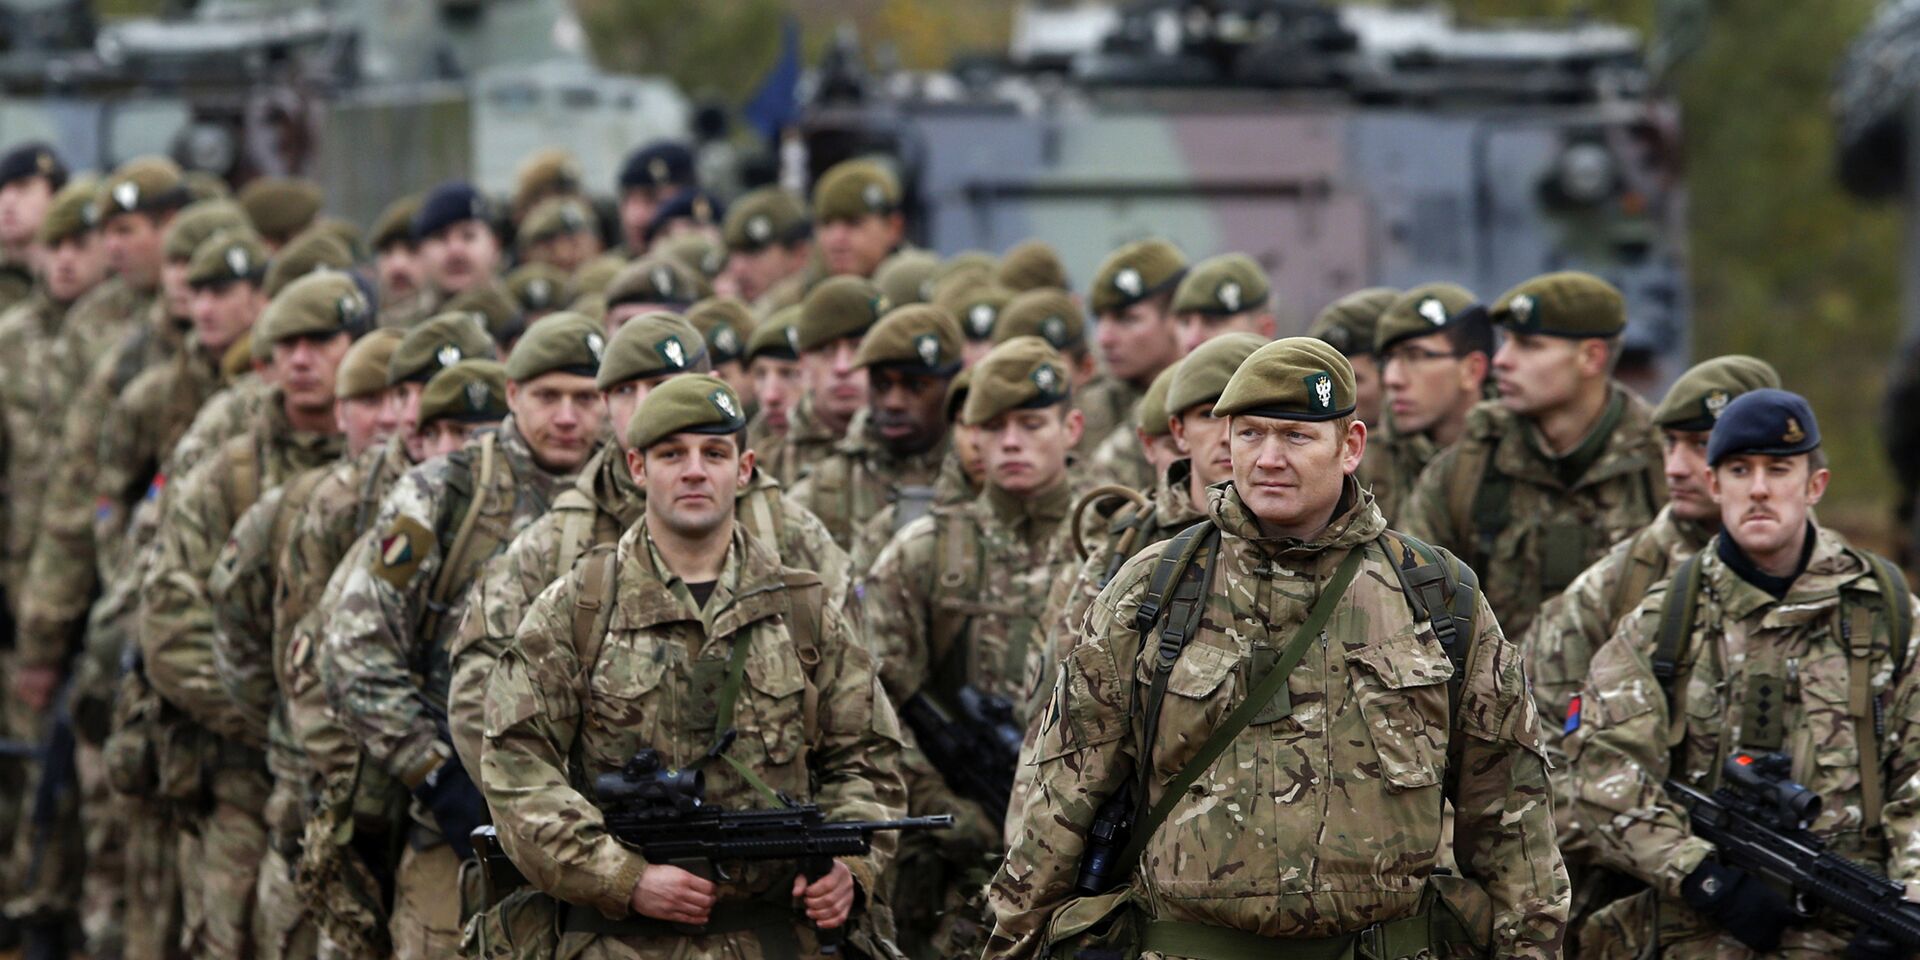 Британские солдаты на учениях НАТО Iron Sword 2014 в Литве - ИноСМИ, 1920, 15.11.2021